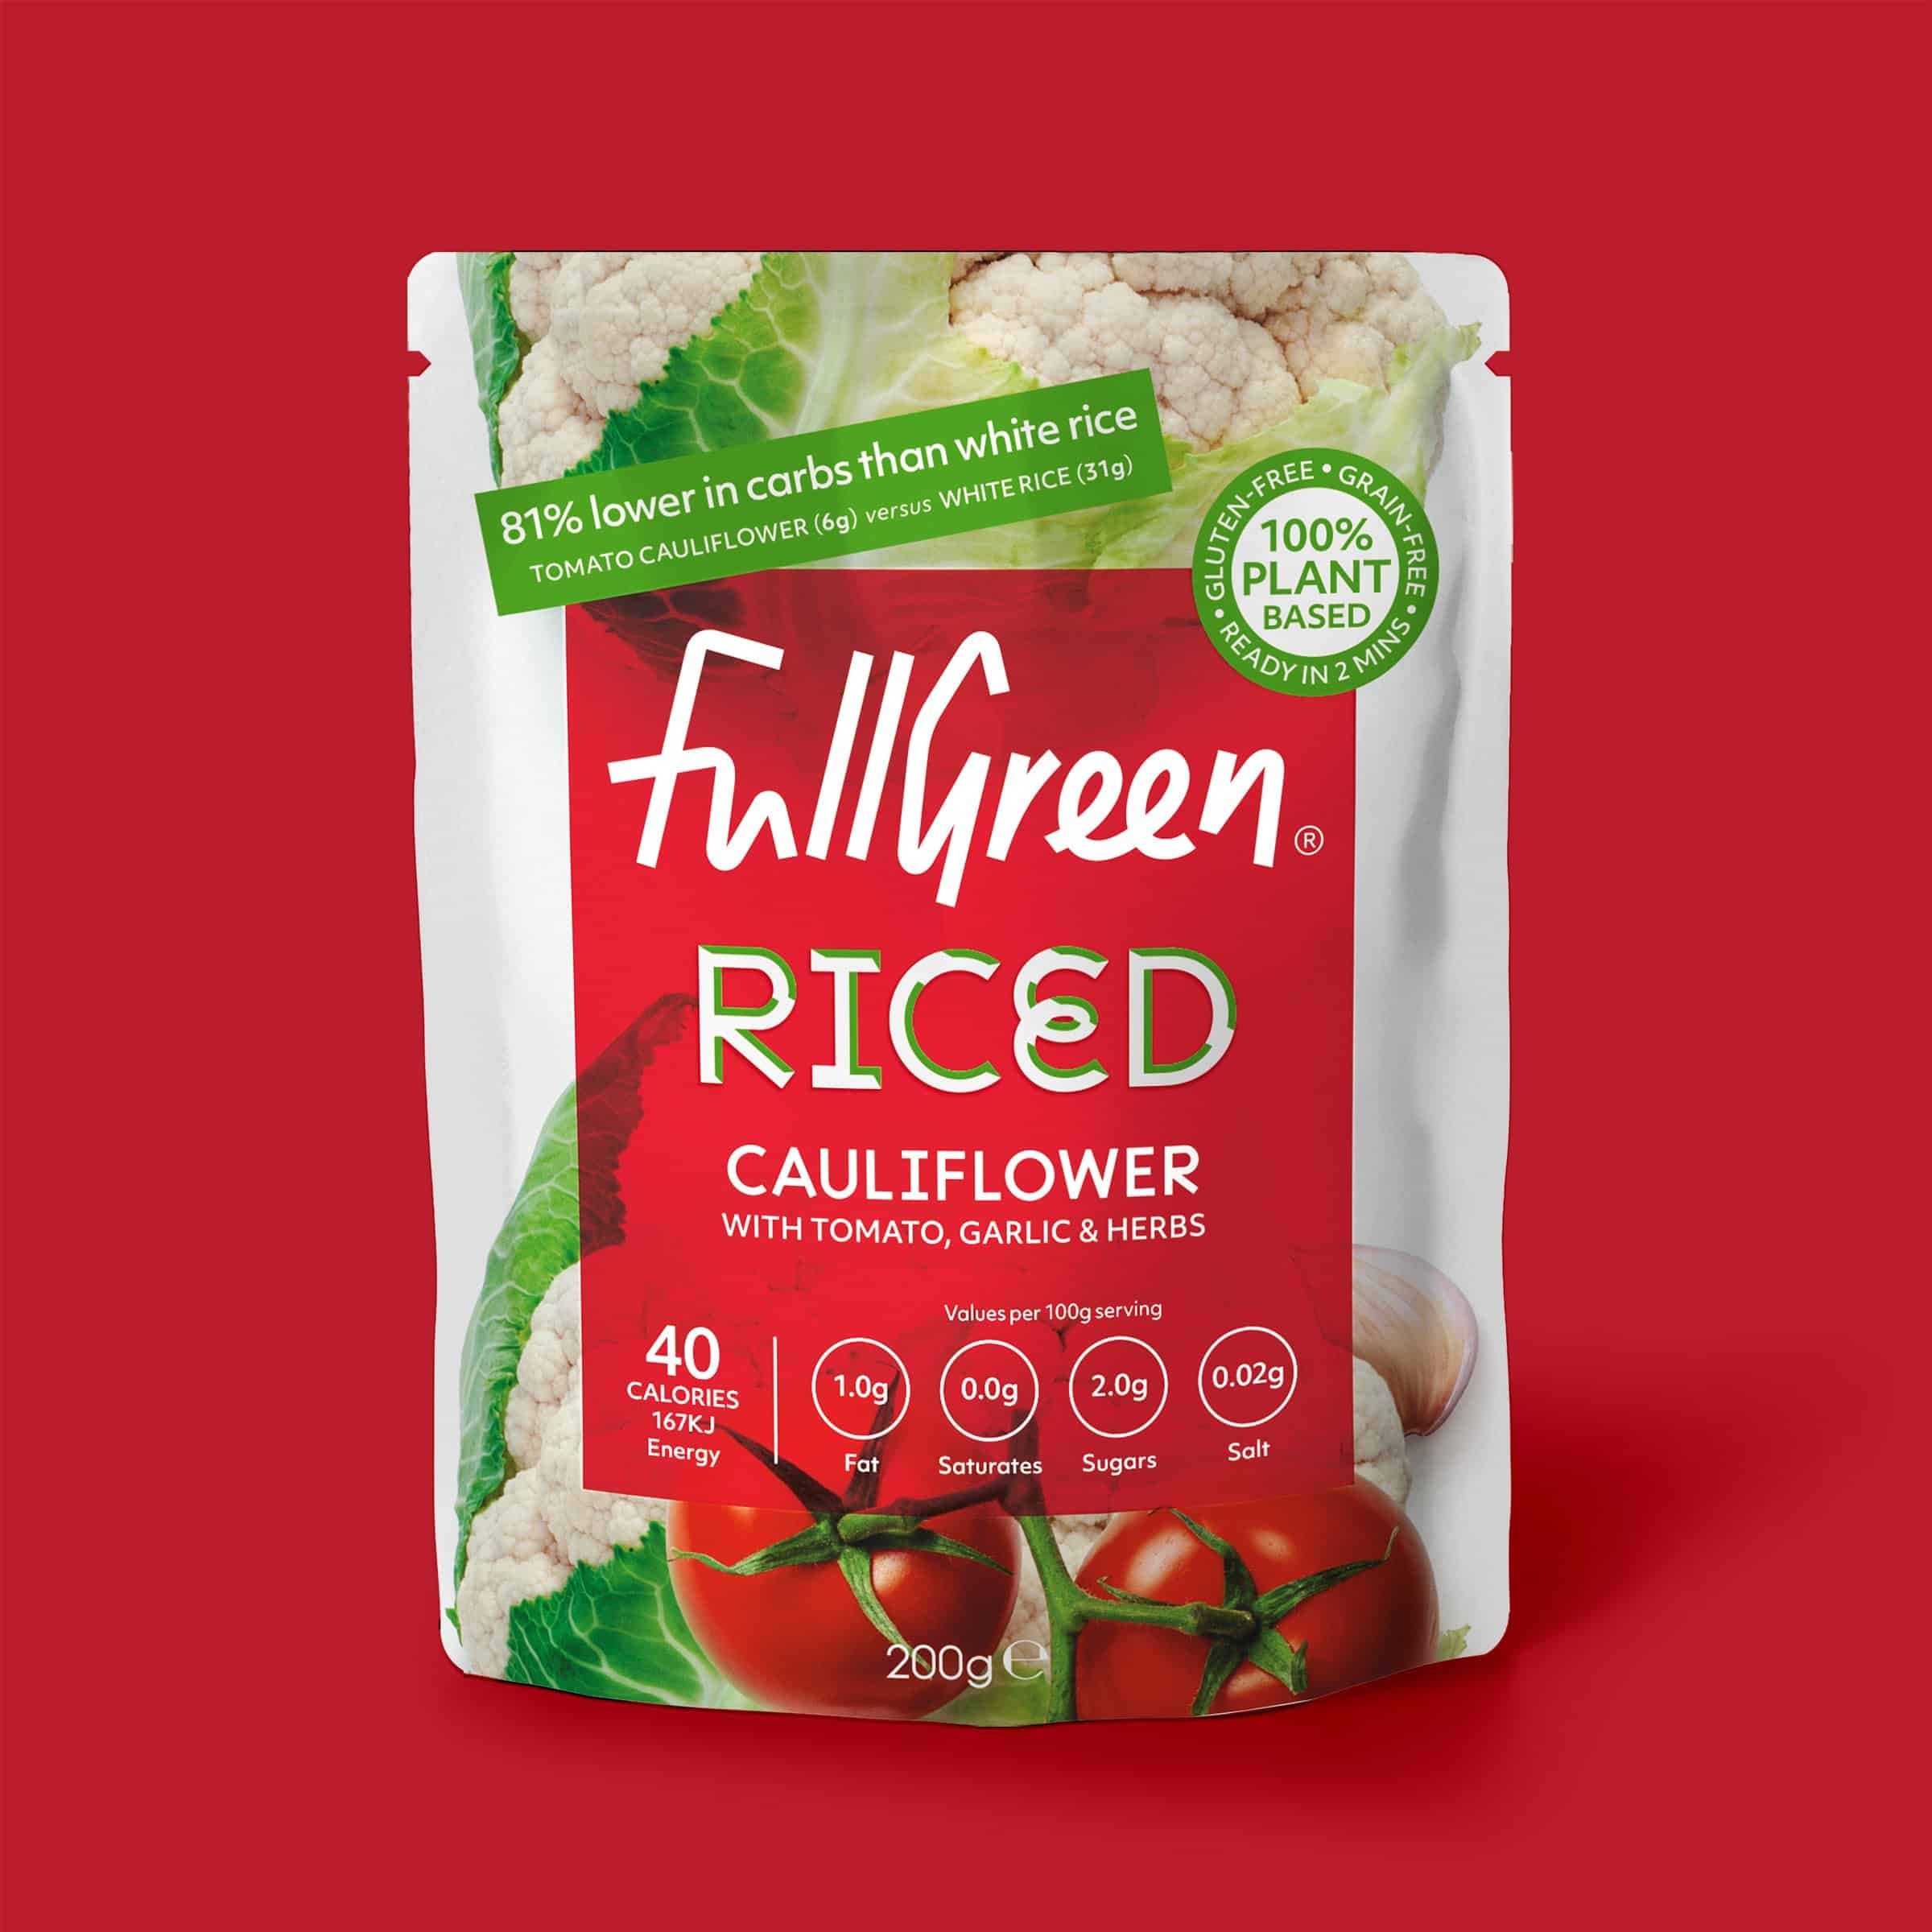 FULLGREEN Riced Cauliflower with Tomato, Garlic & Herbs, 200g